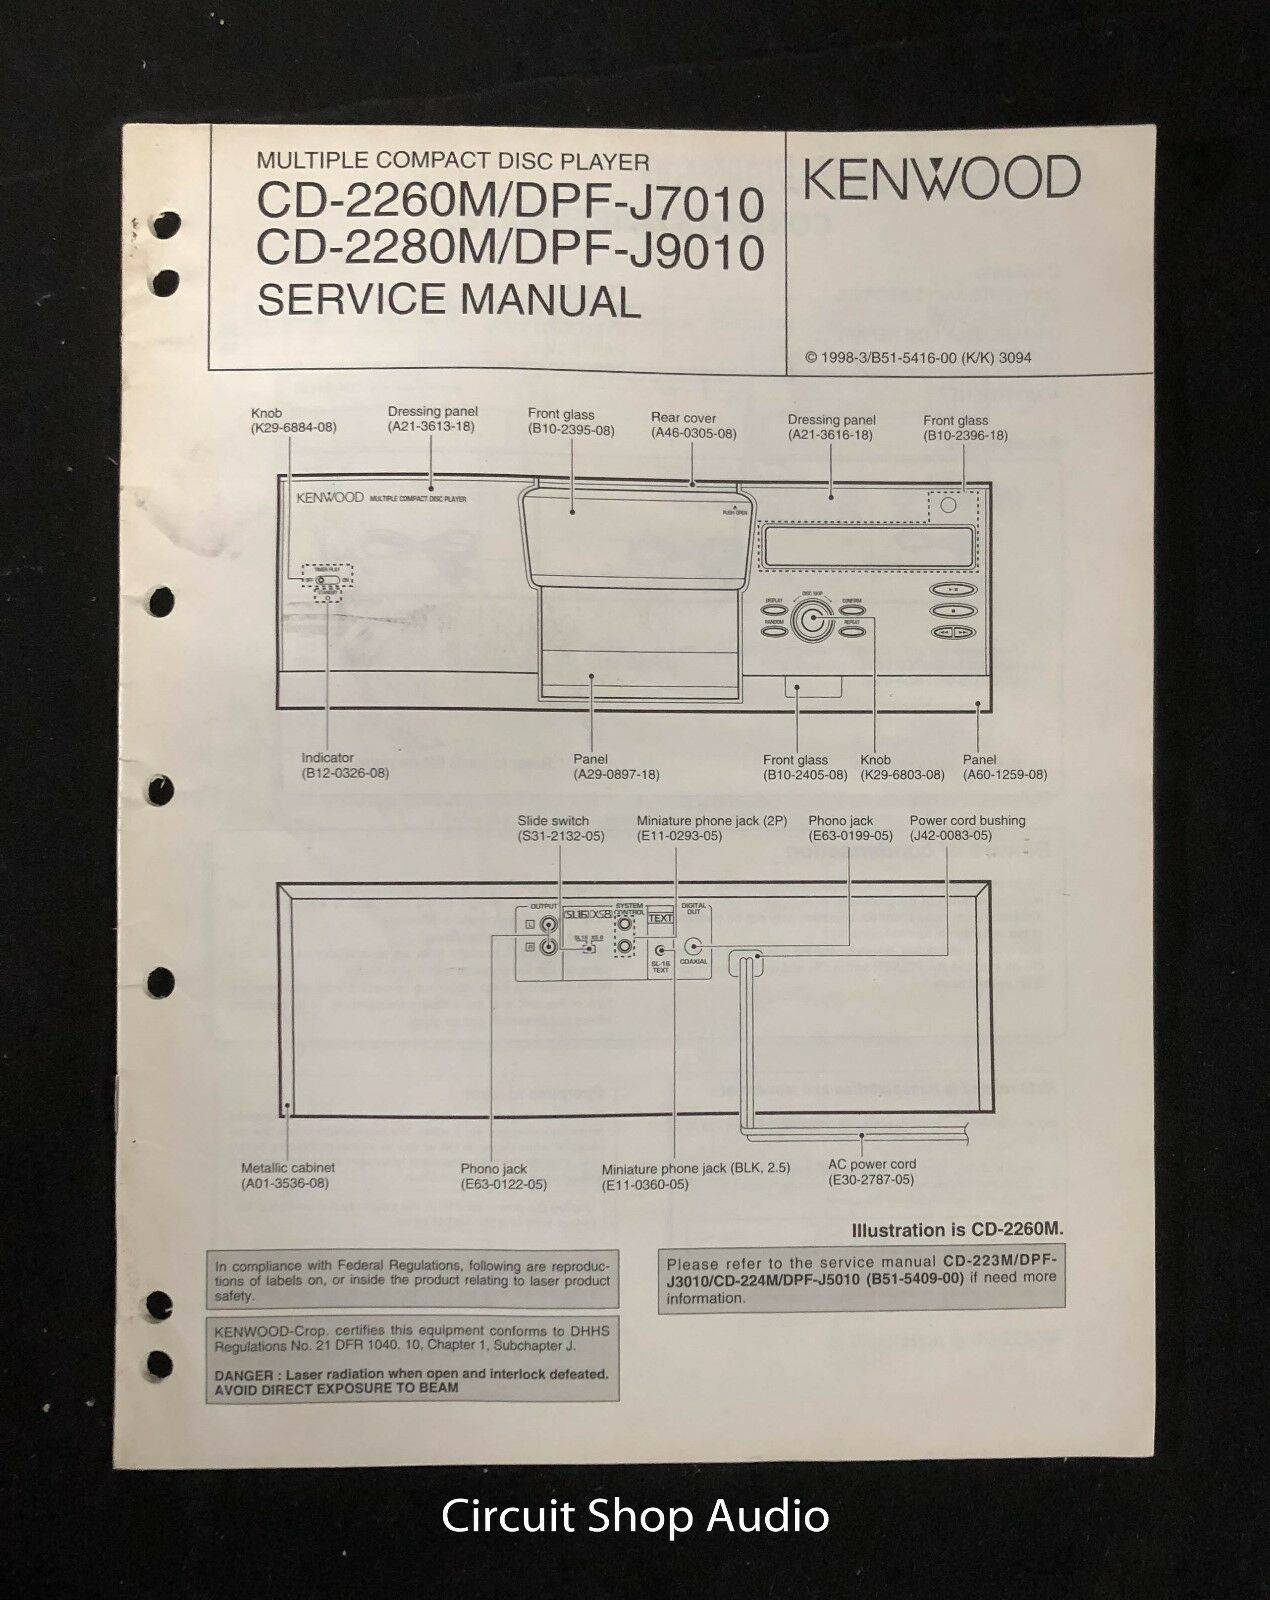 Kenwood DPF-J7010